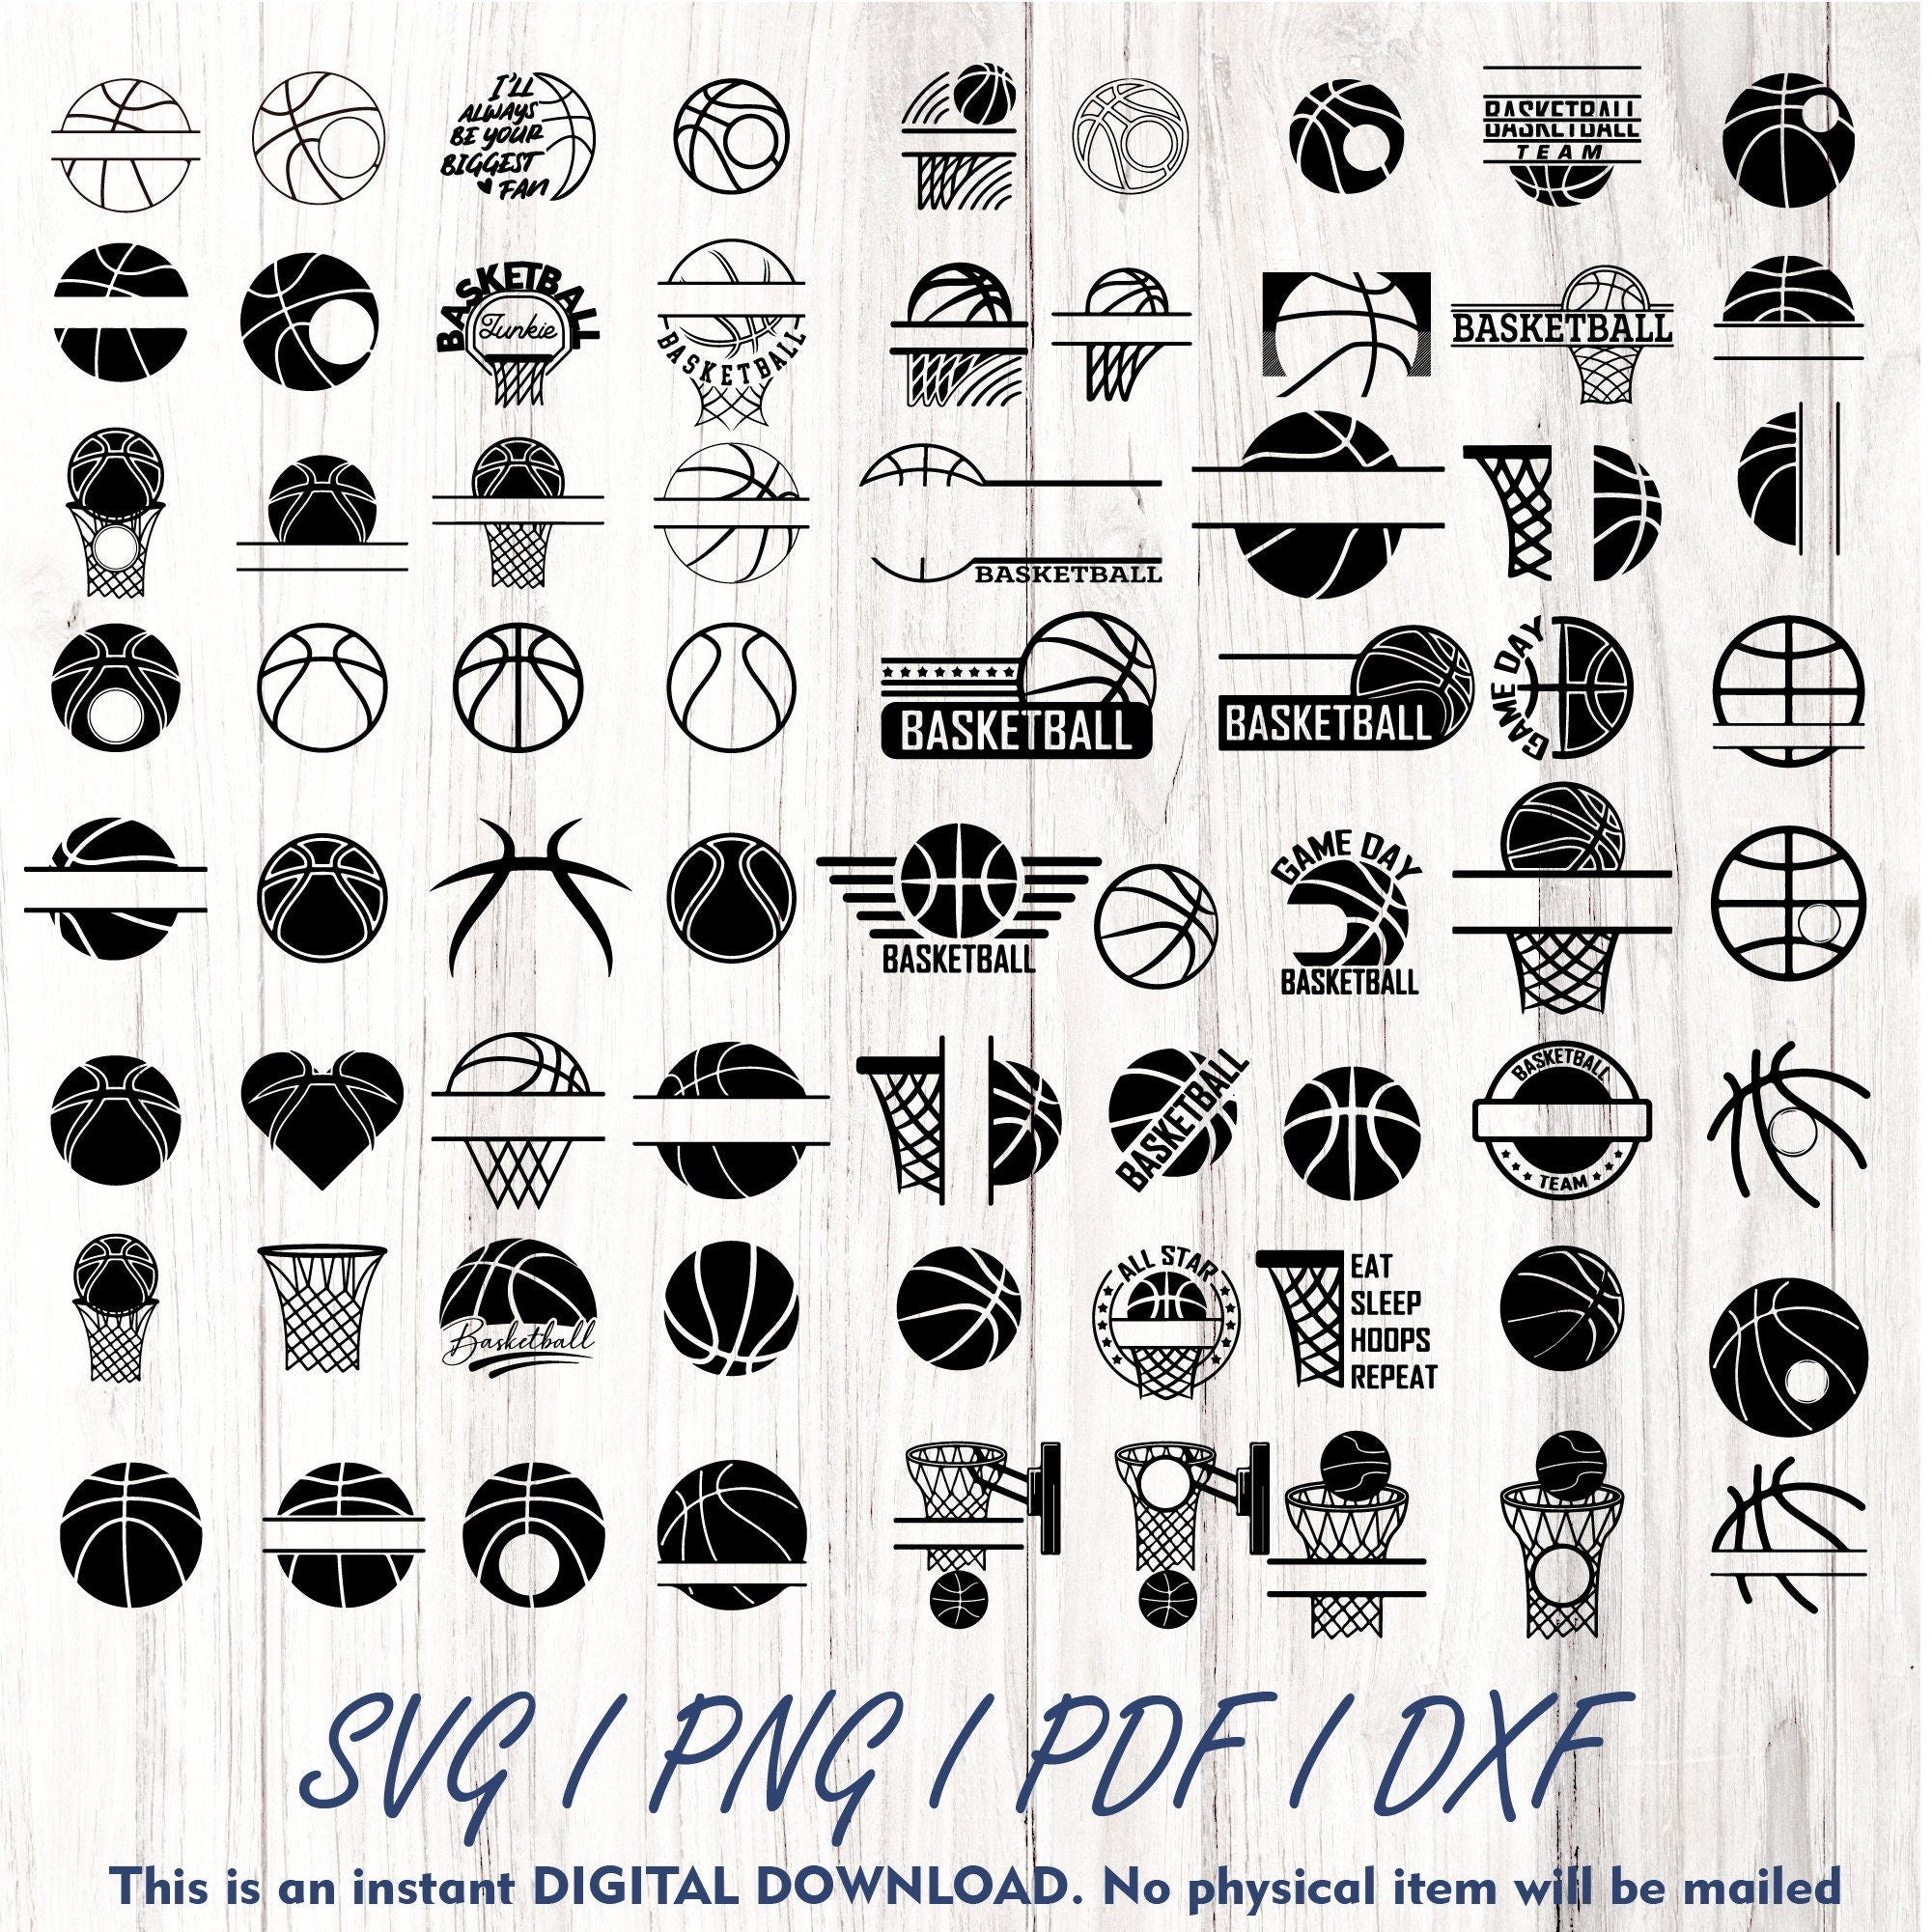 Basketball monogram SVG PNG bundle, Team Logo, Cricut Files, Silhouette Files, Cut Files, PNG Files for Silhouette, Cricut, Cutting Plotter